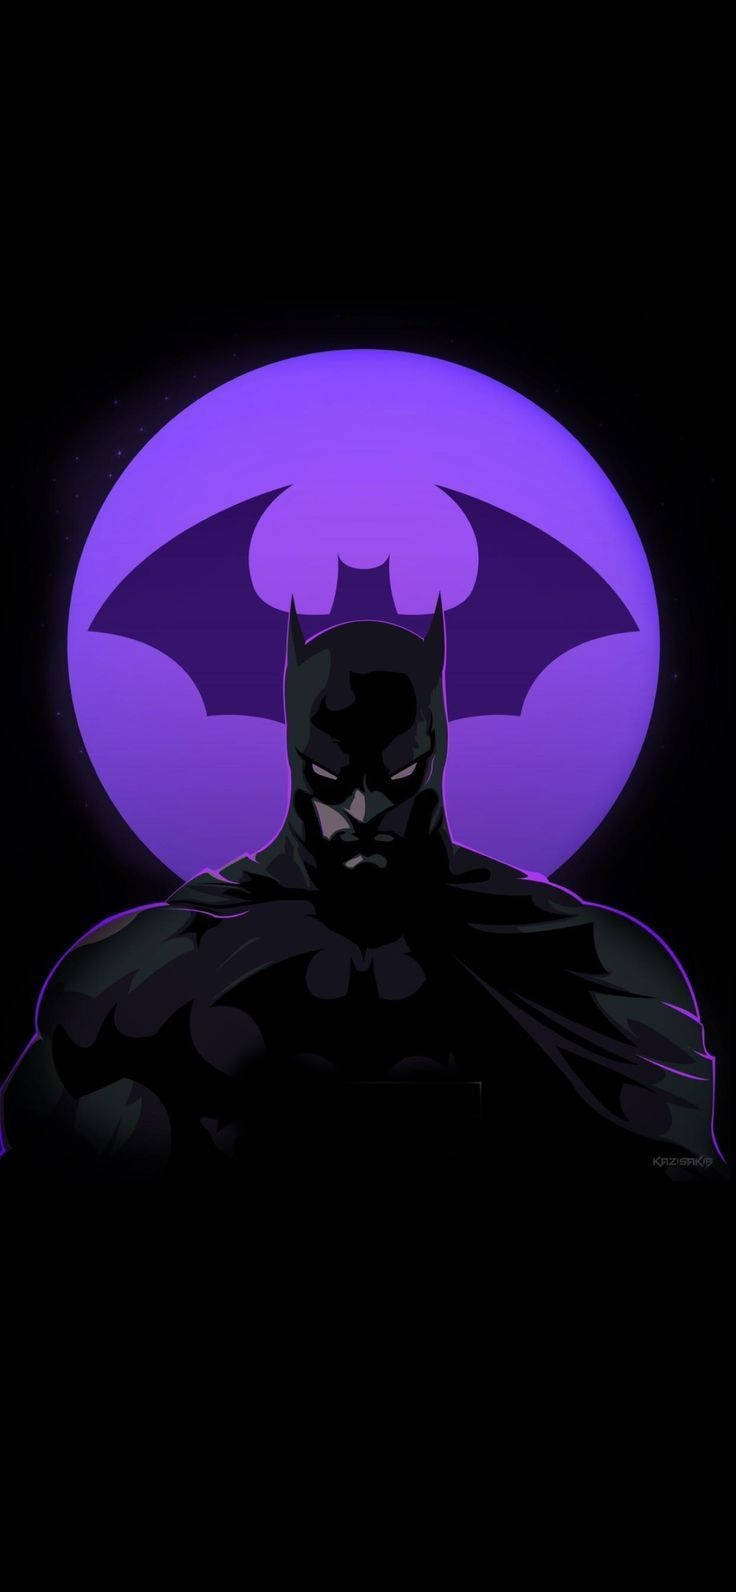 Download Batman Fanfiction Illustration Iphone X Wallpaper 